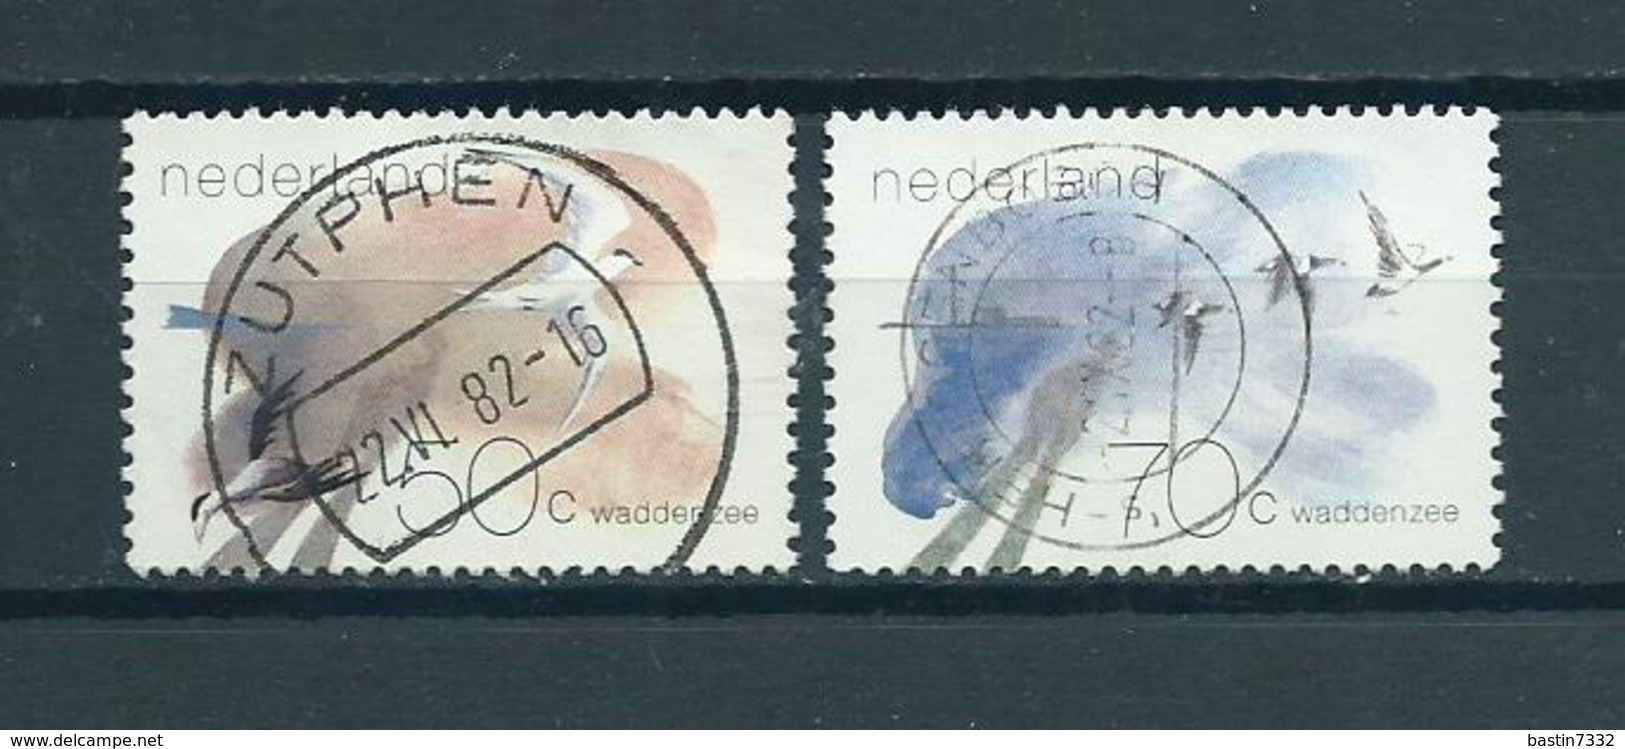 1982 Netherlands Complete Set Birds,oiseaux,Waddenzee Used/gebruikt/oblitere - Used Stamps